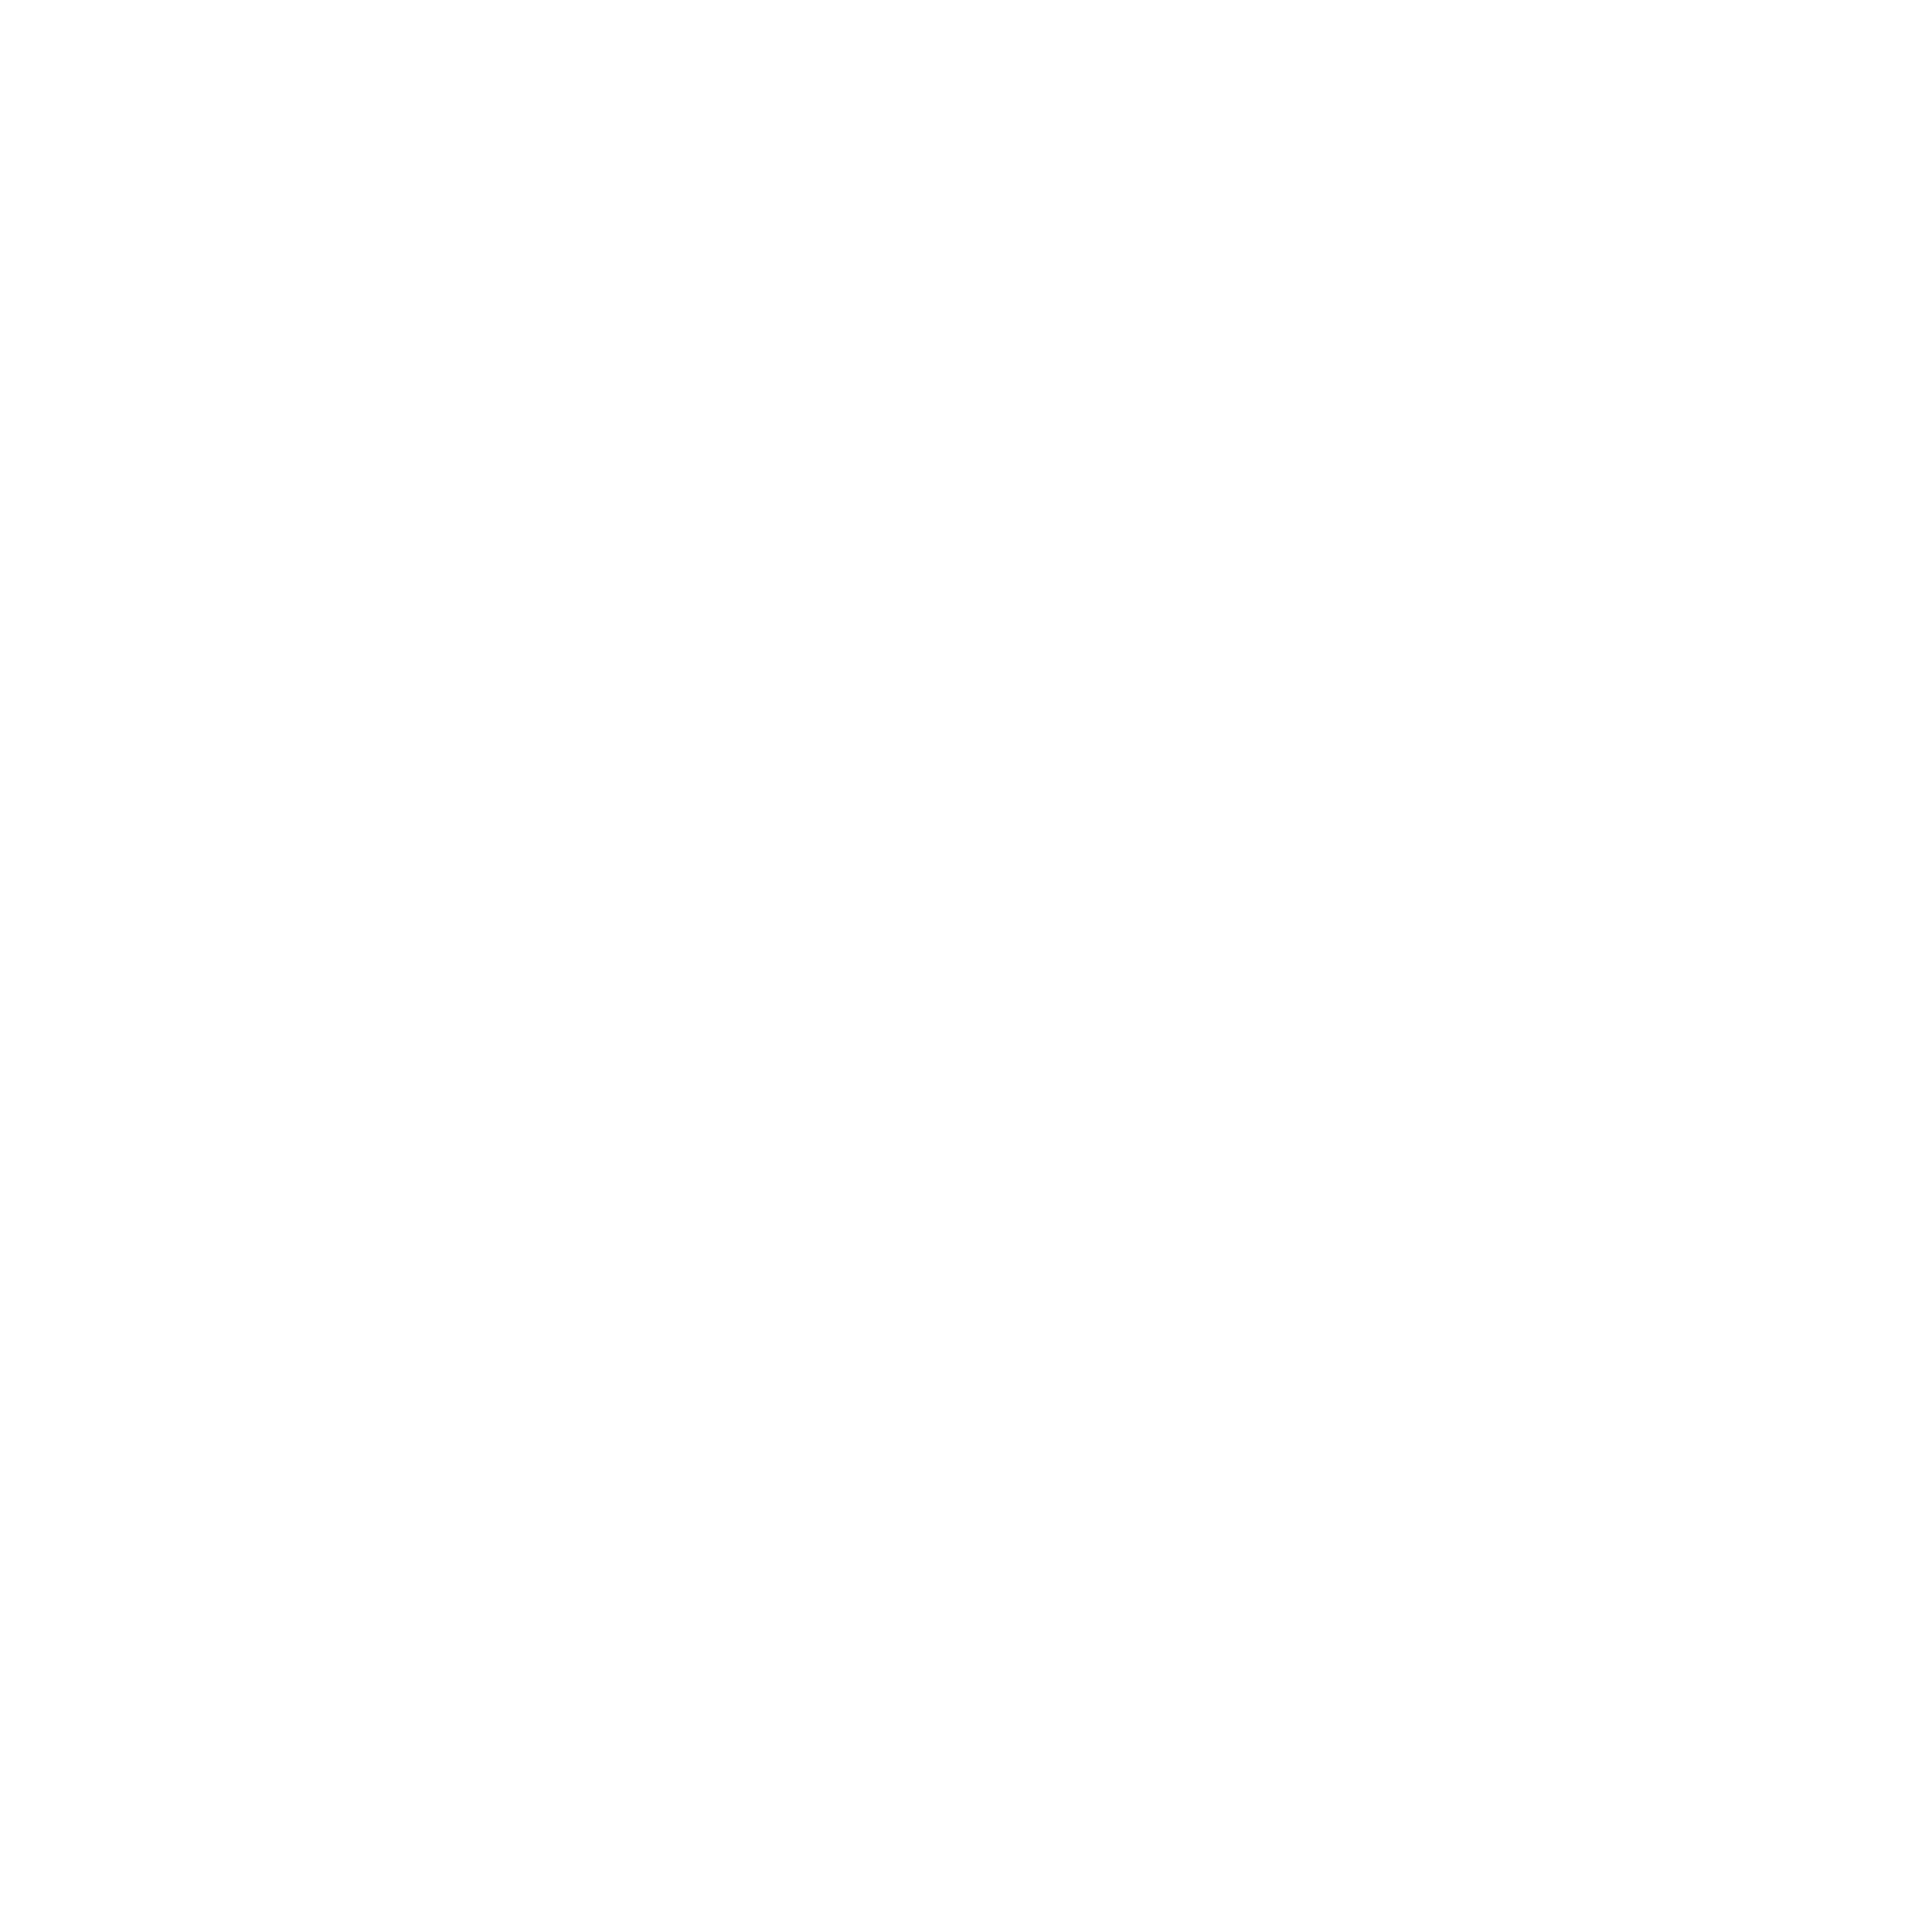 Extend / sites internet